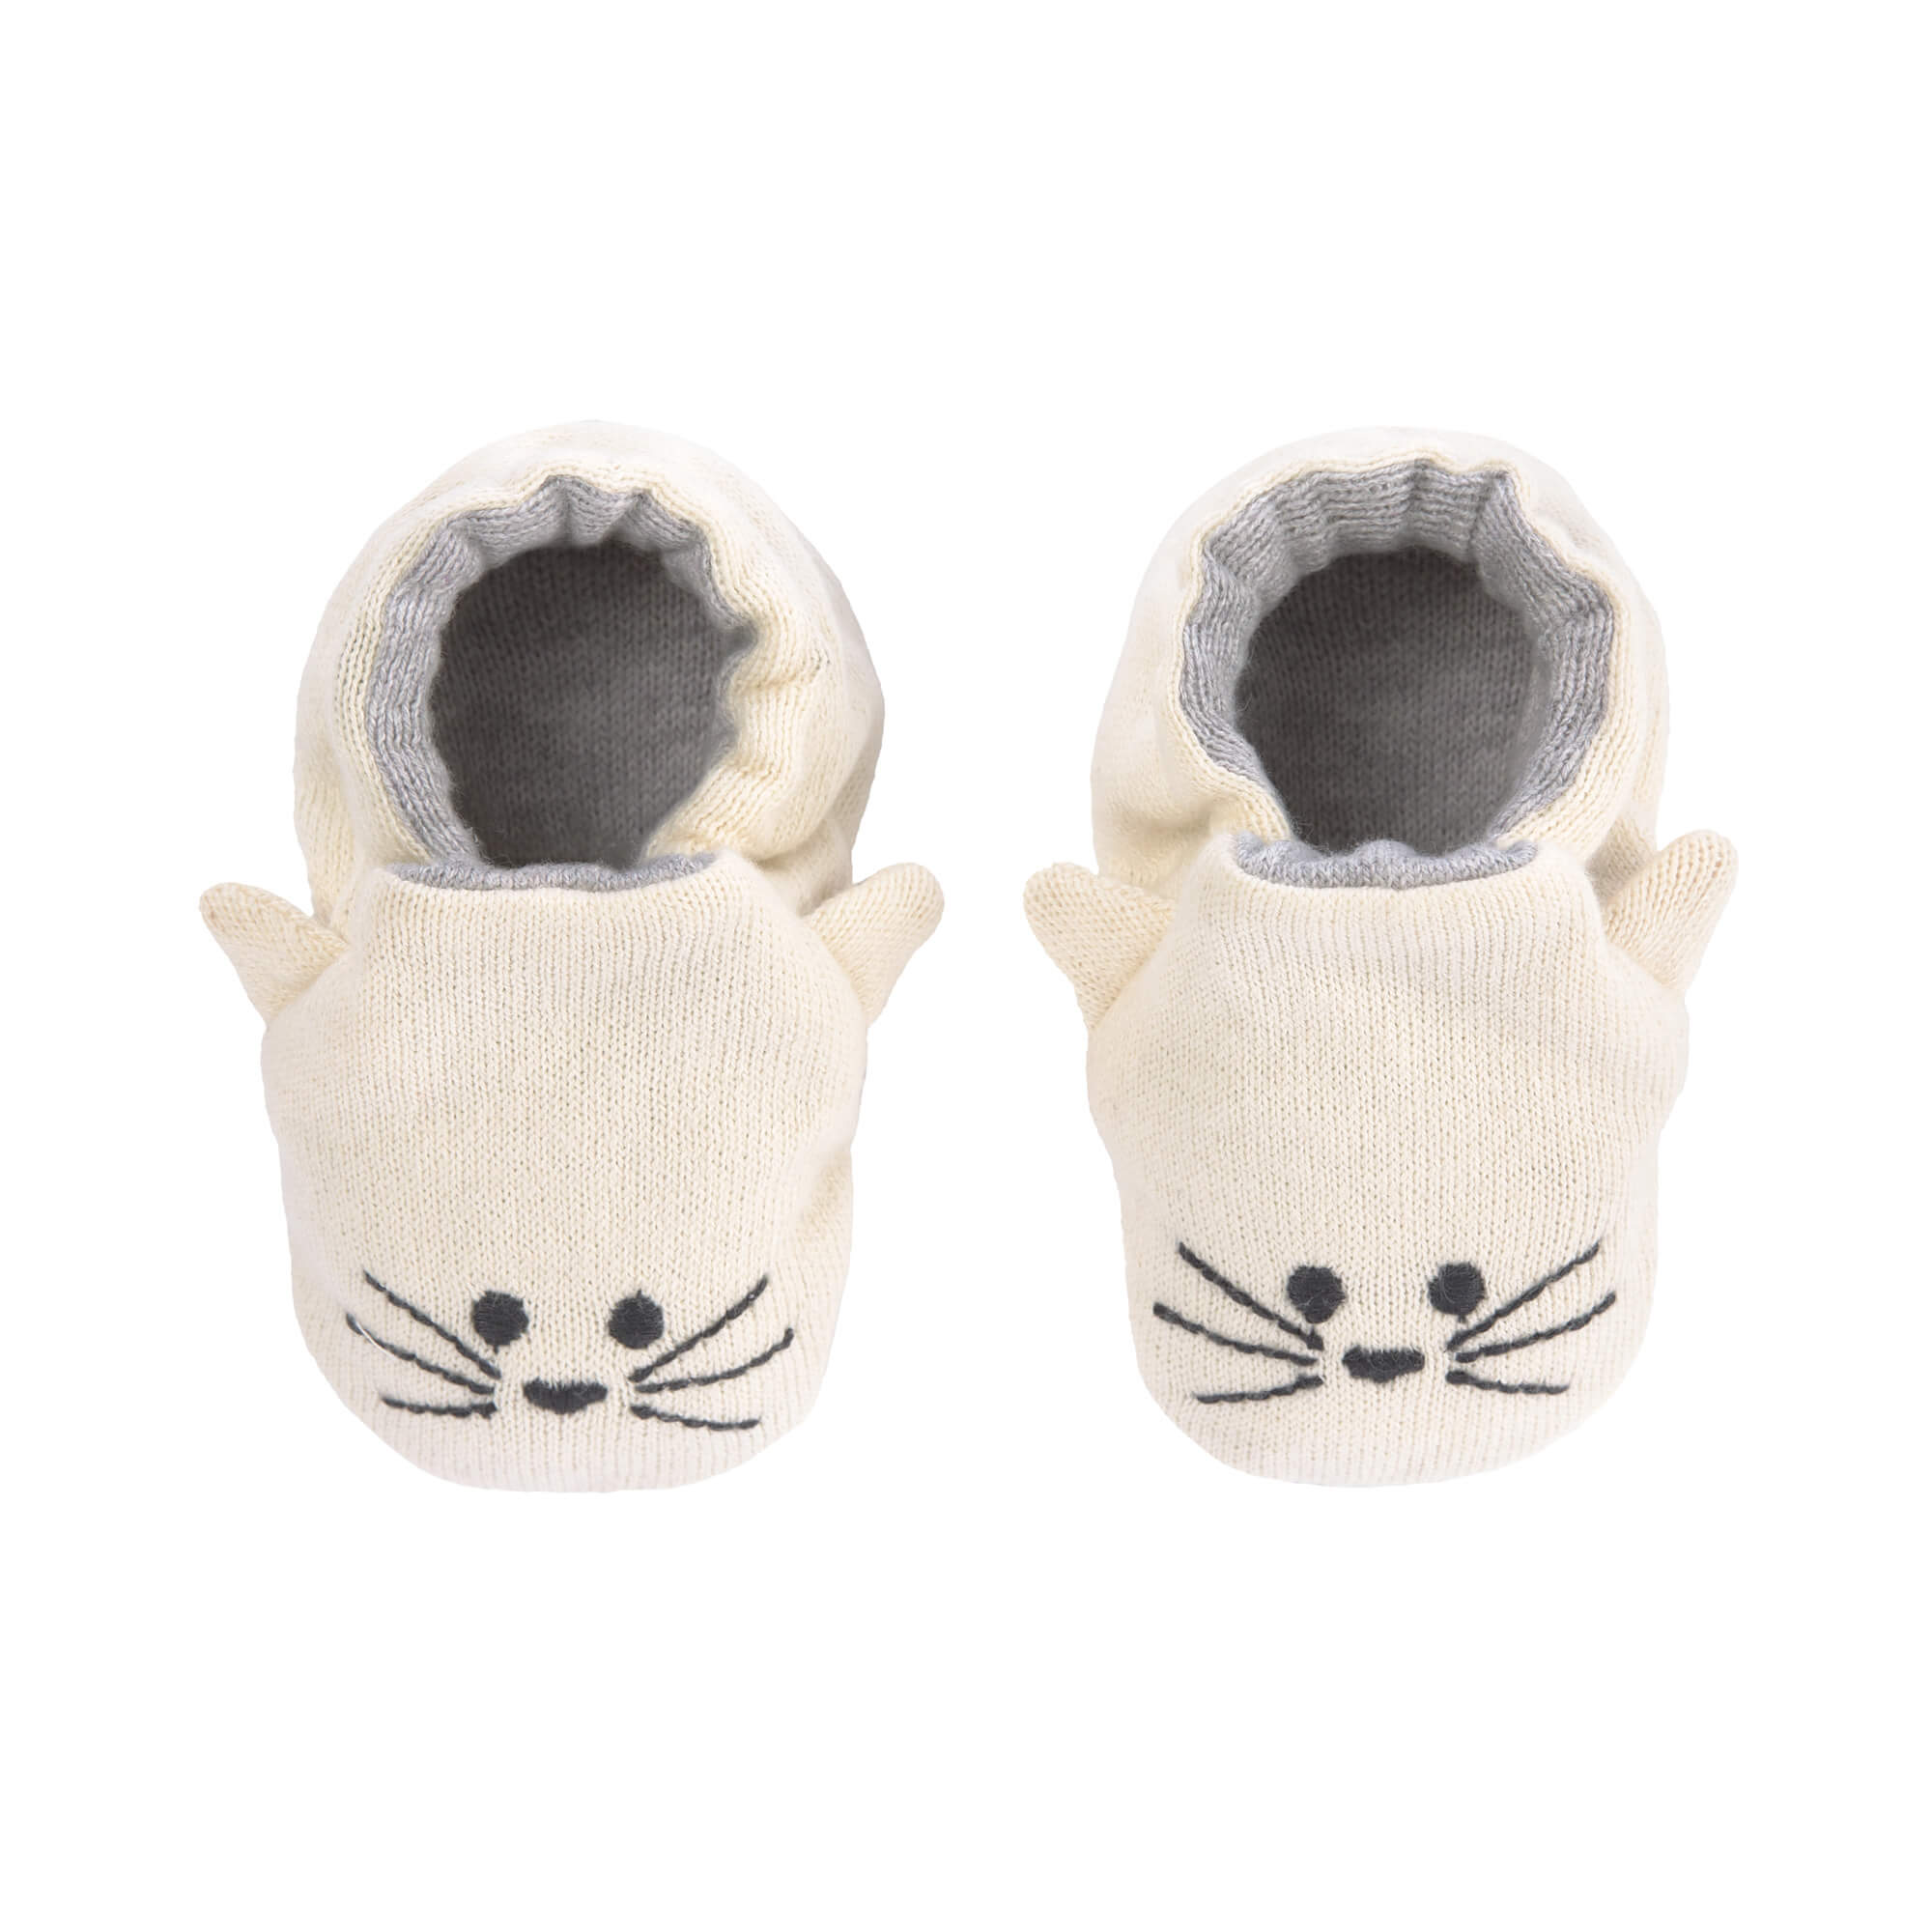 Baby-Schuhe GOTS "Little Chums Cat" One Size